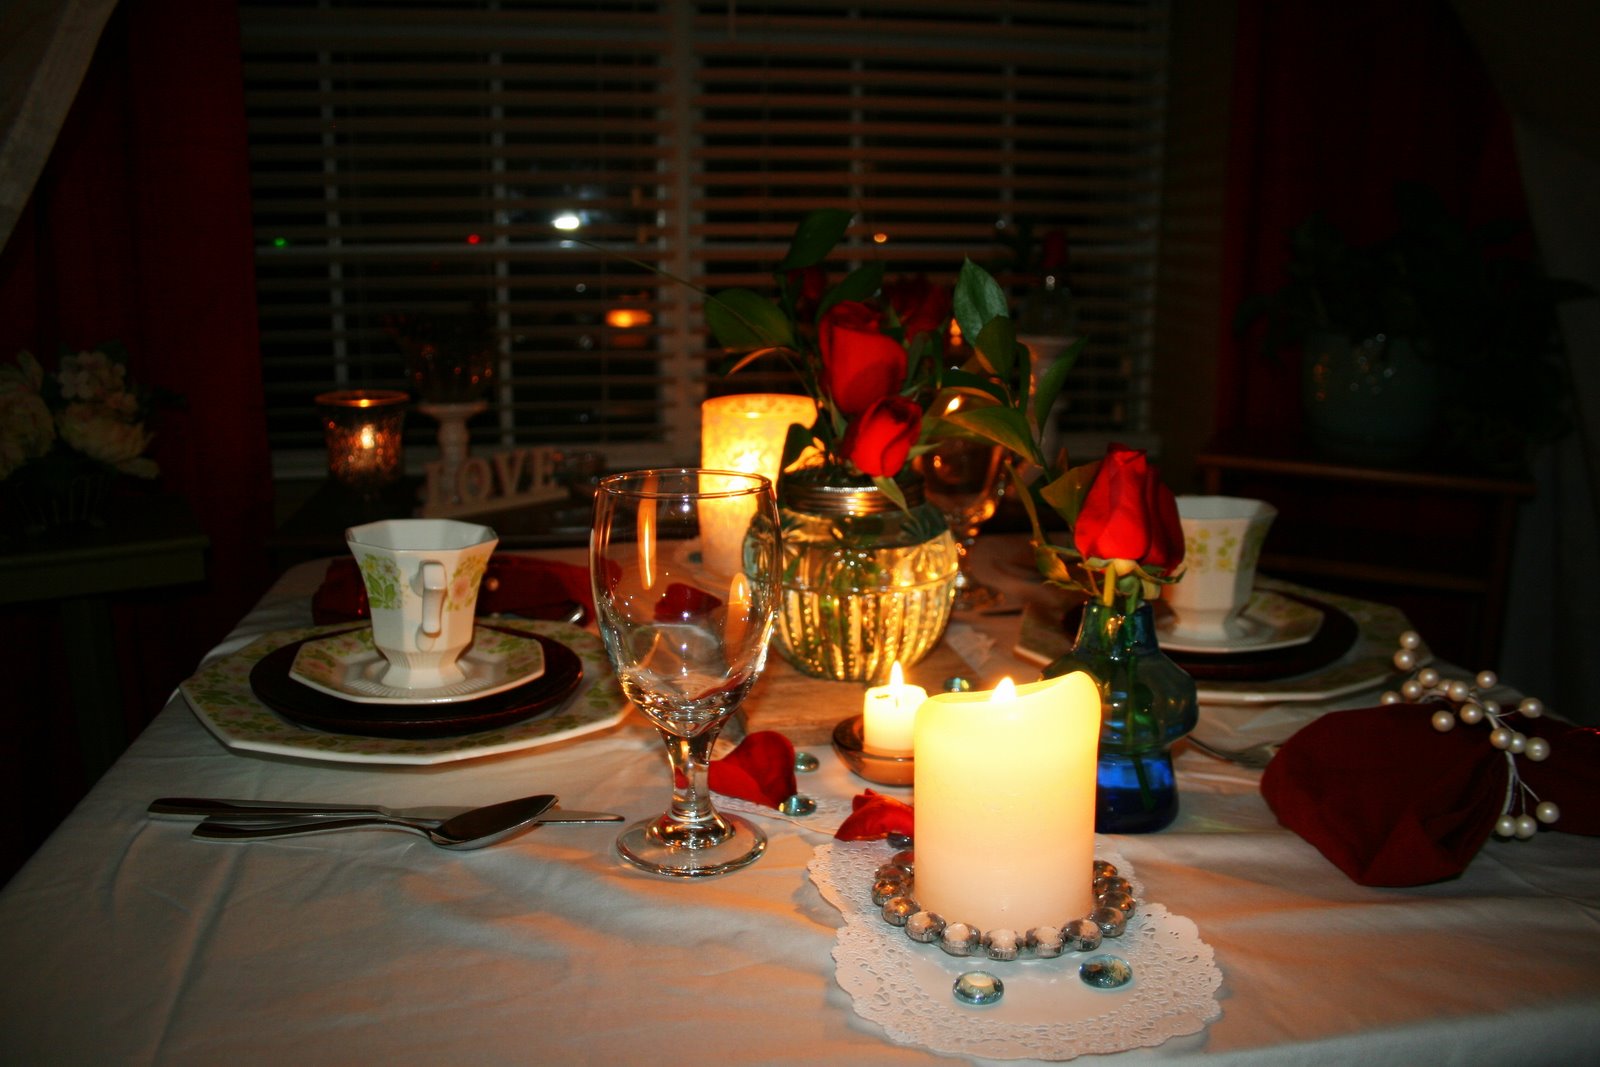 Defrump Me: Romantic Dinner Date at Home